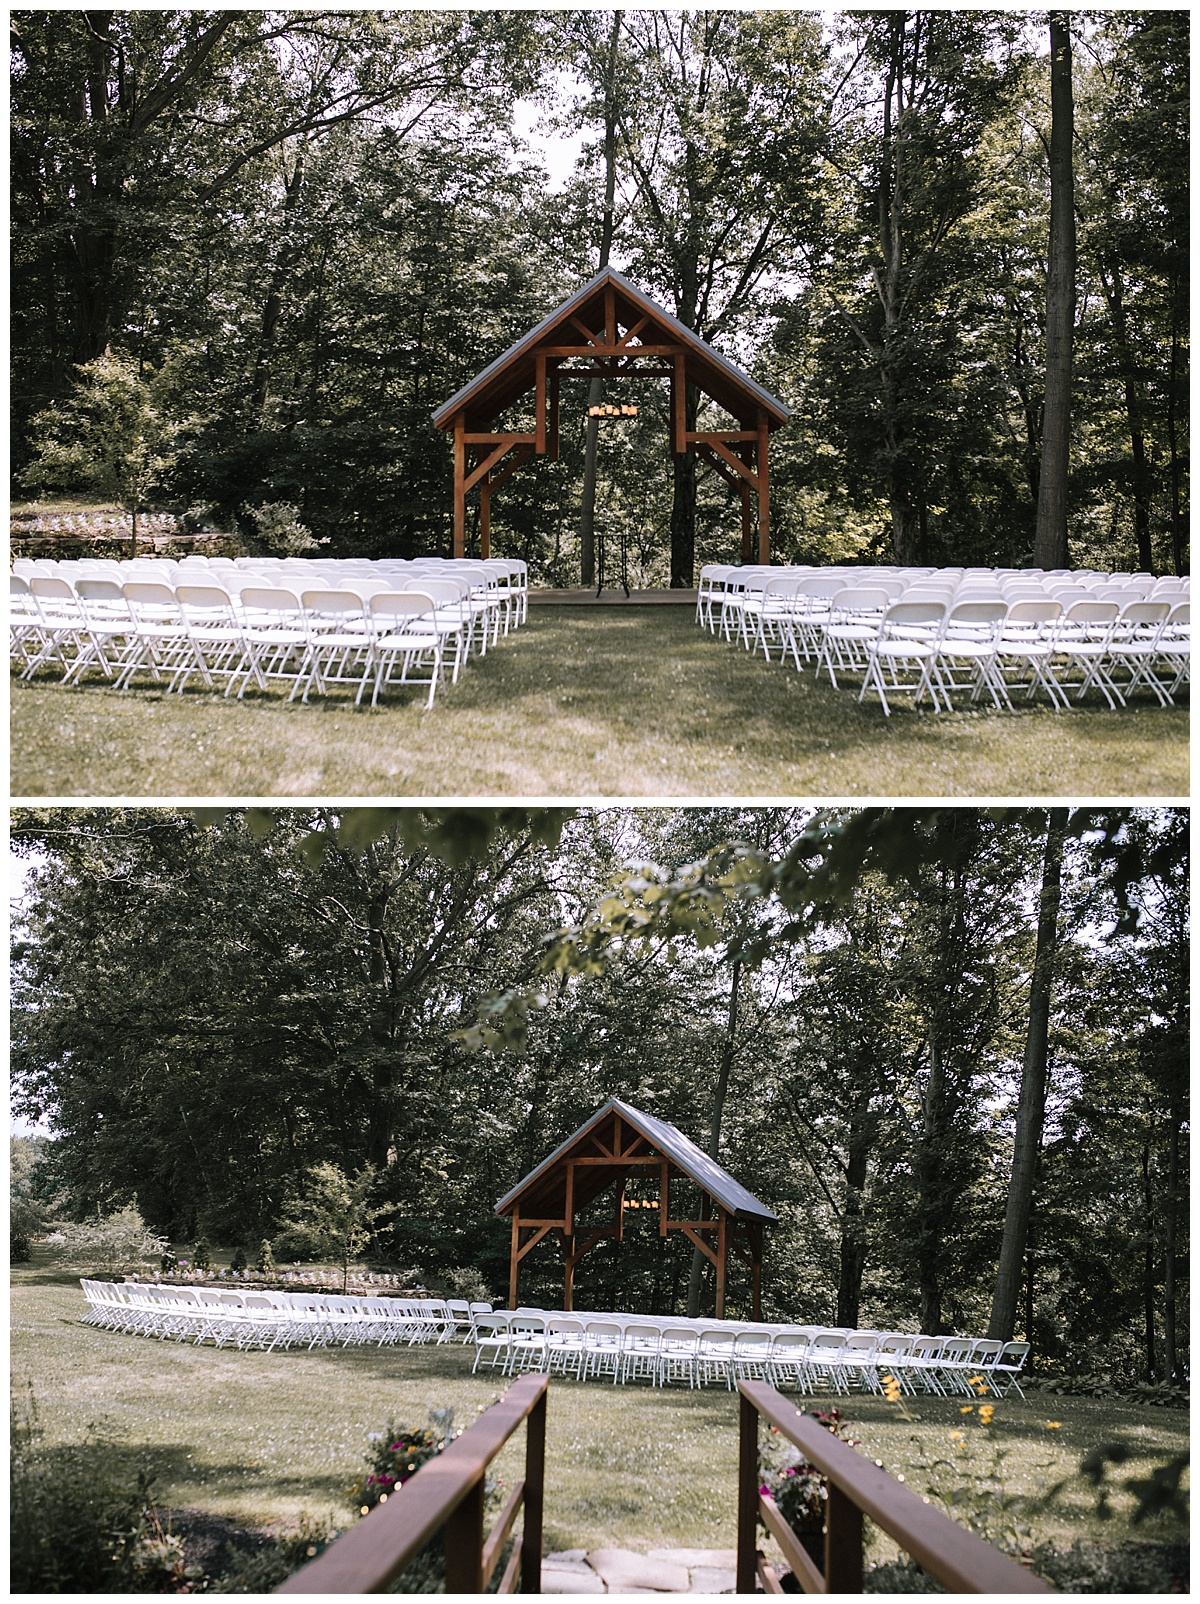 Meadow Ridge Events - Northeast Ohio Wedding Photographer - Lindsay Dawn Photography